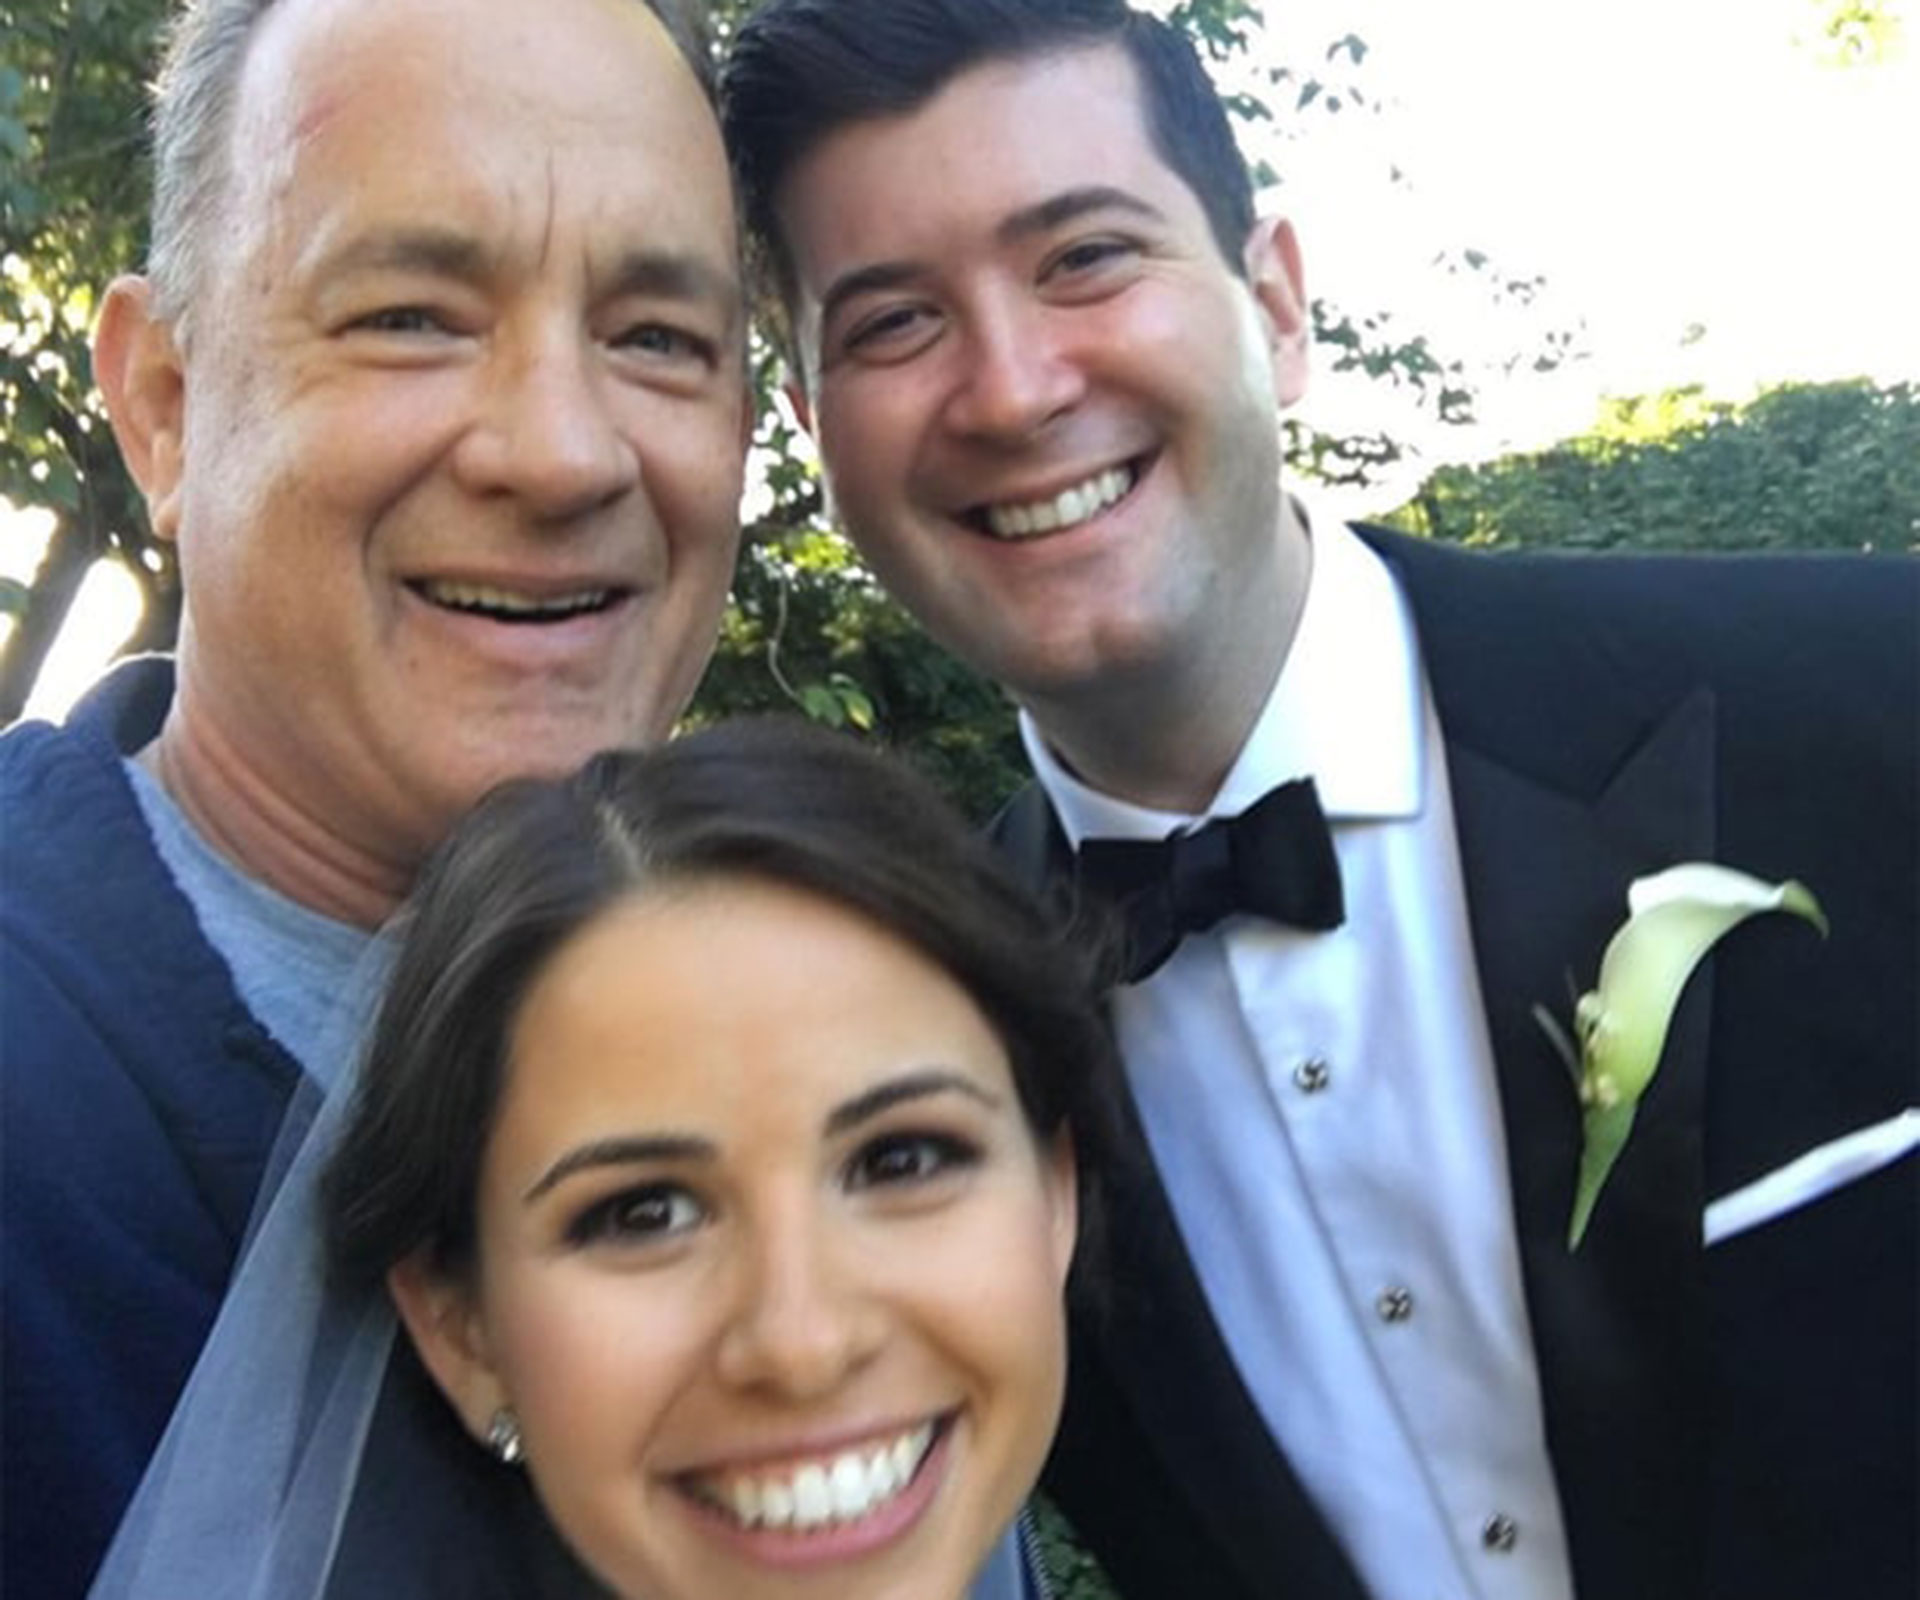 Tom Hanks crashes wedding and it’s amazing